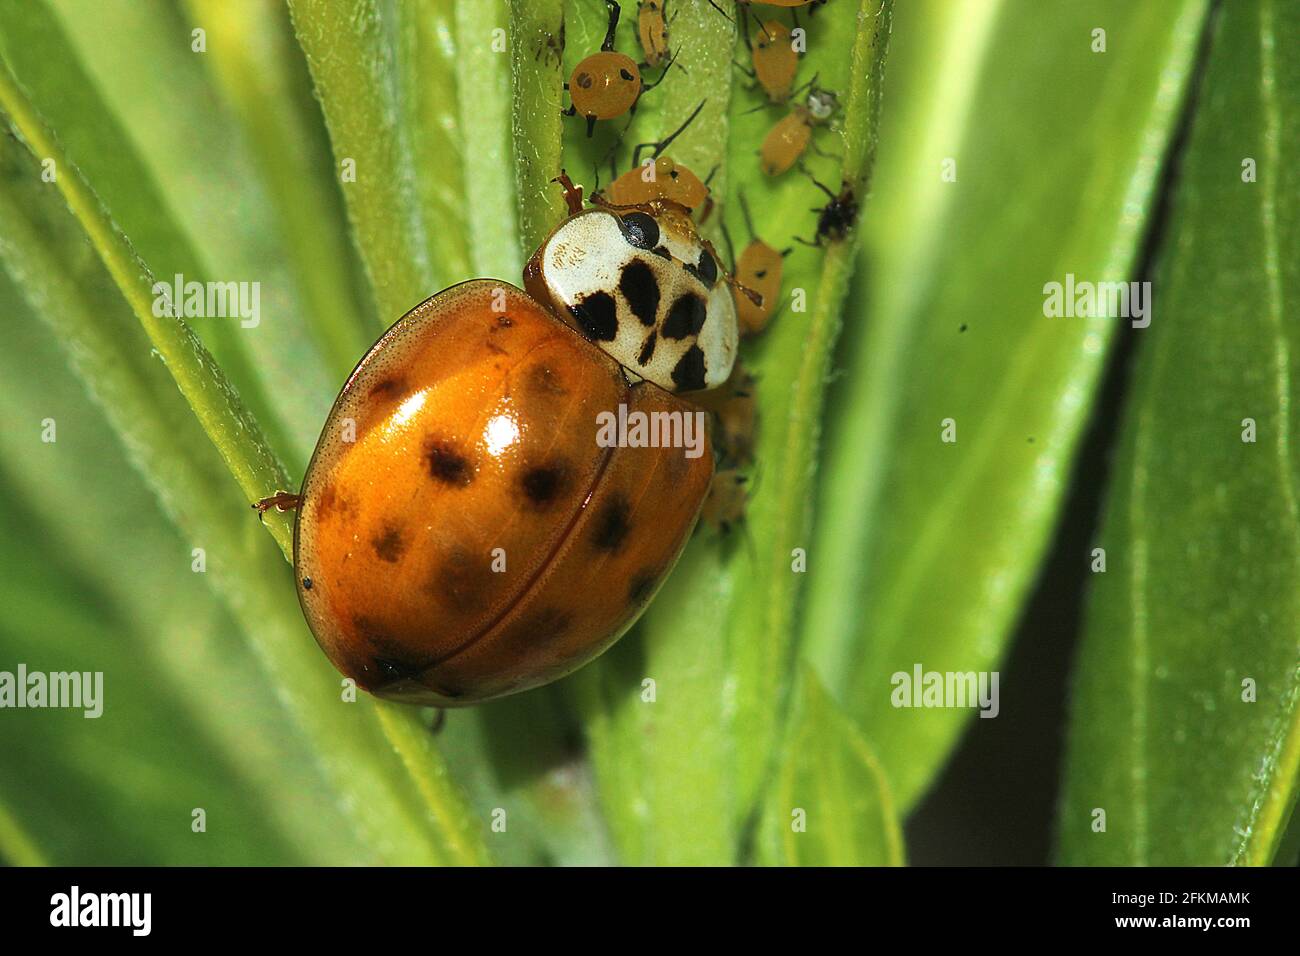 Harlequin ladybug (Harmonia axyridis), feeding on aphids (Aphis nerii) Stock Photo